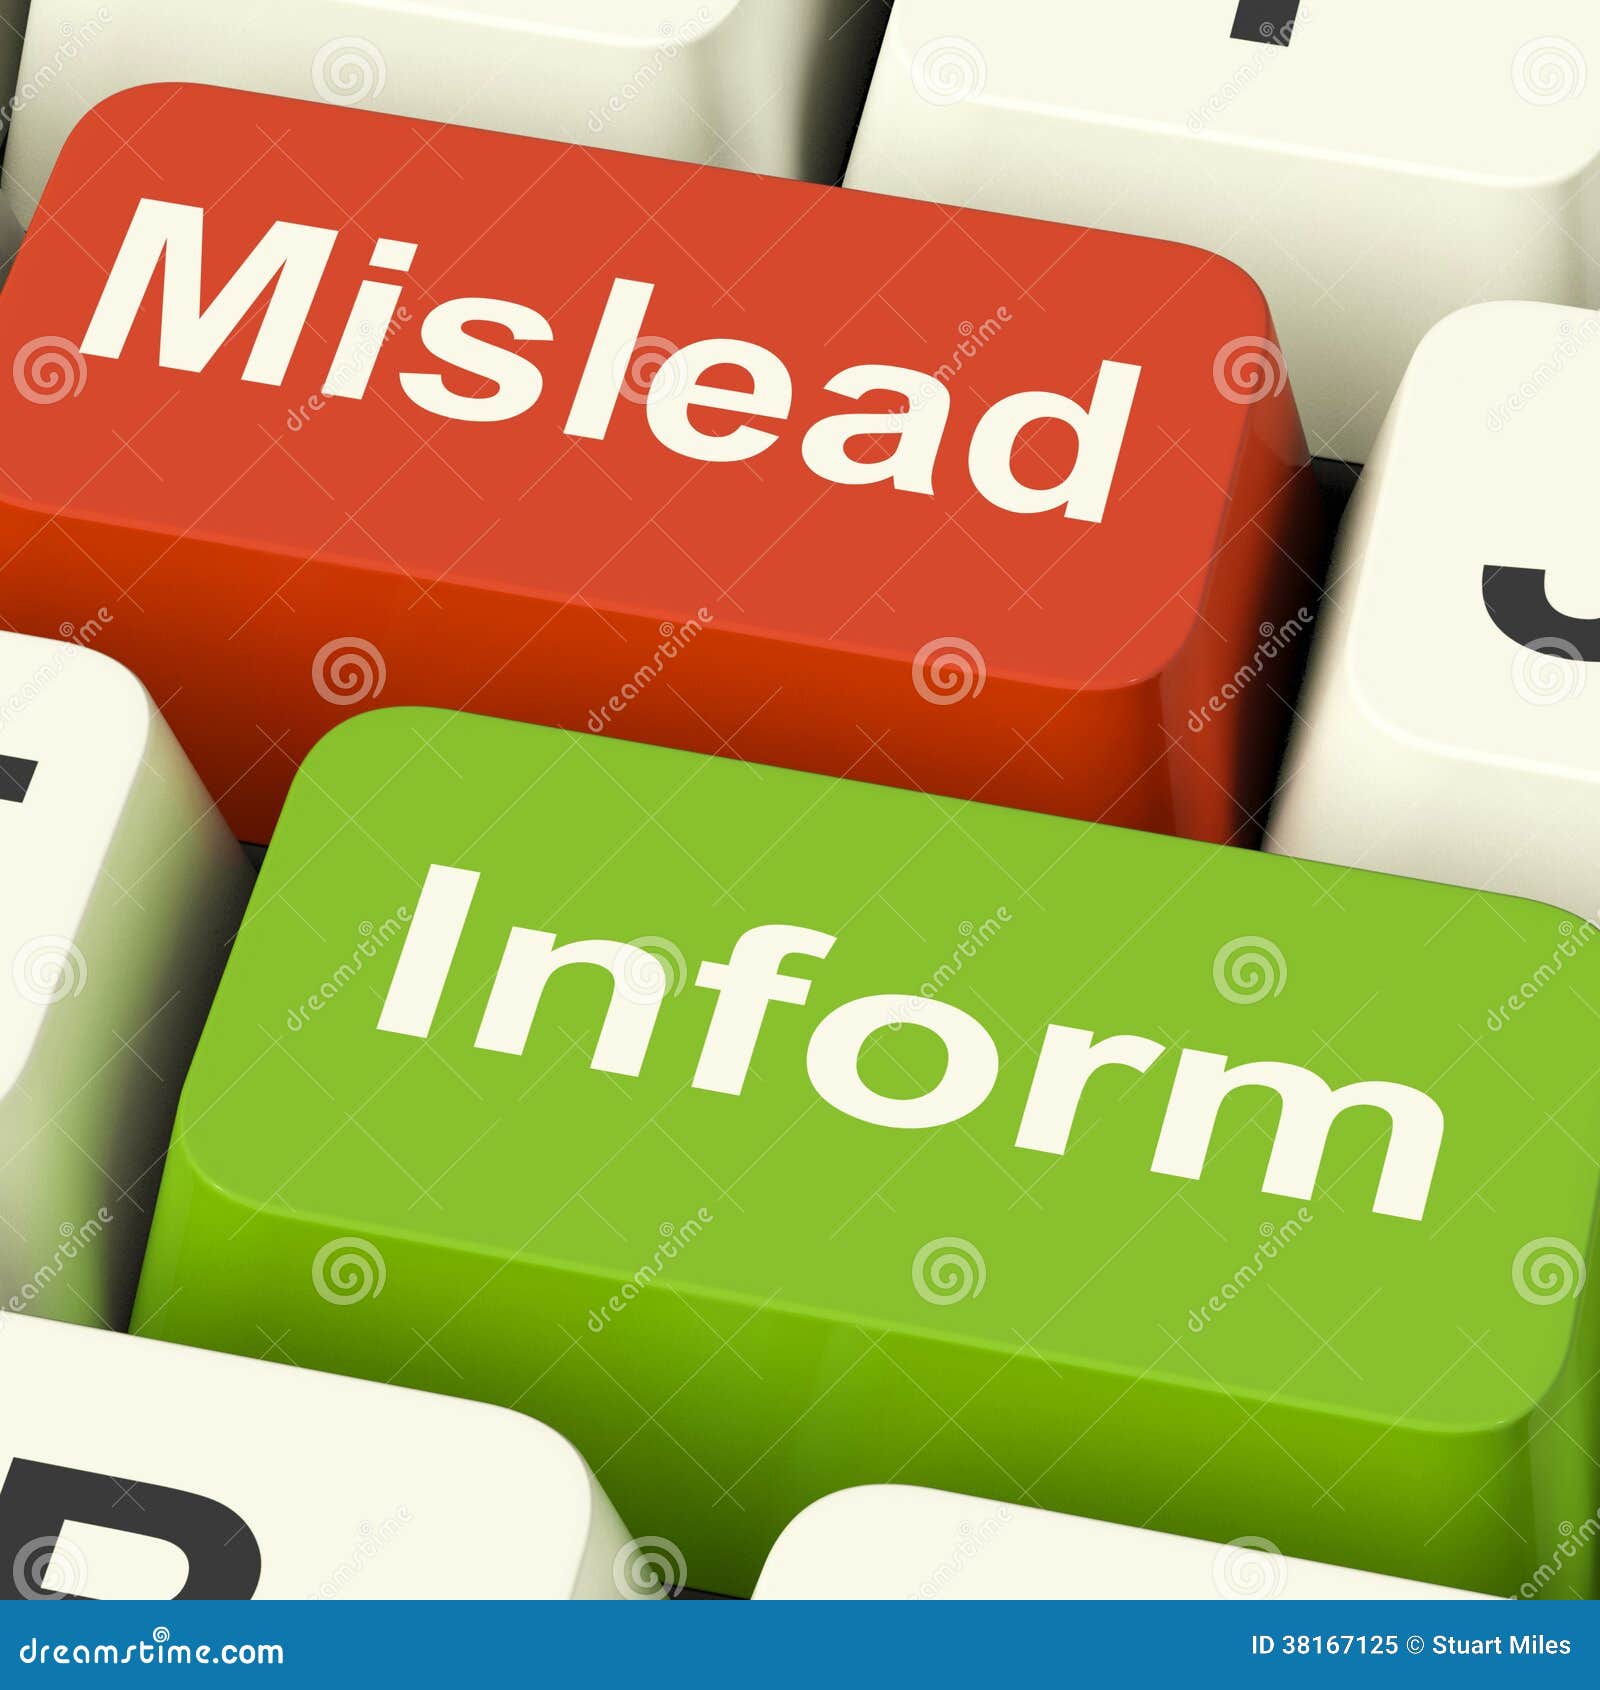 mislead inform keys shows misleading or informative advice